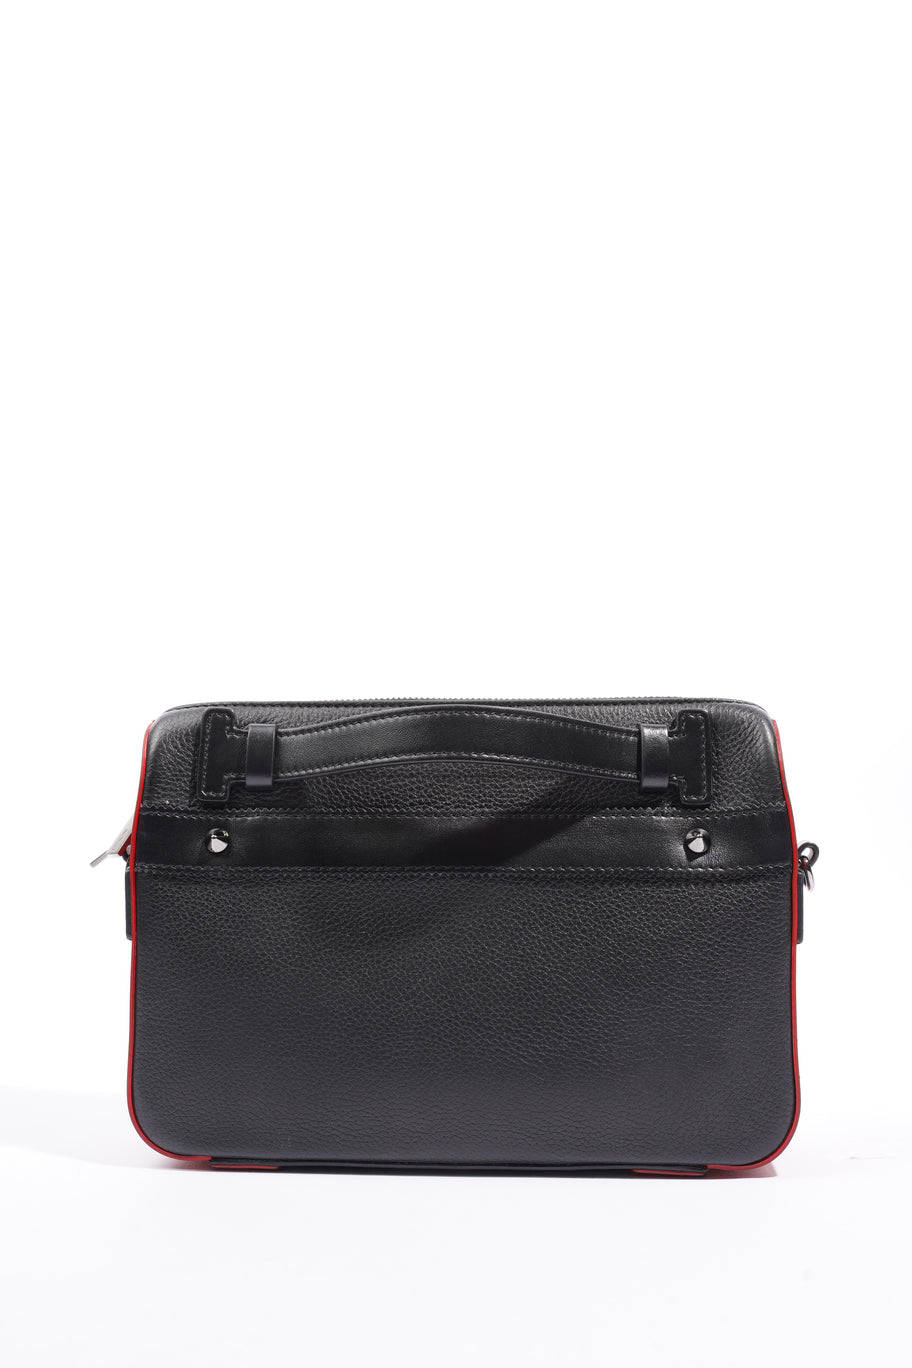 Ruisbuddy Messenger Bag  Black / Red Calfskin Leather Image 4